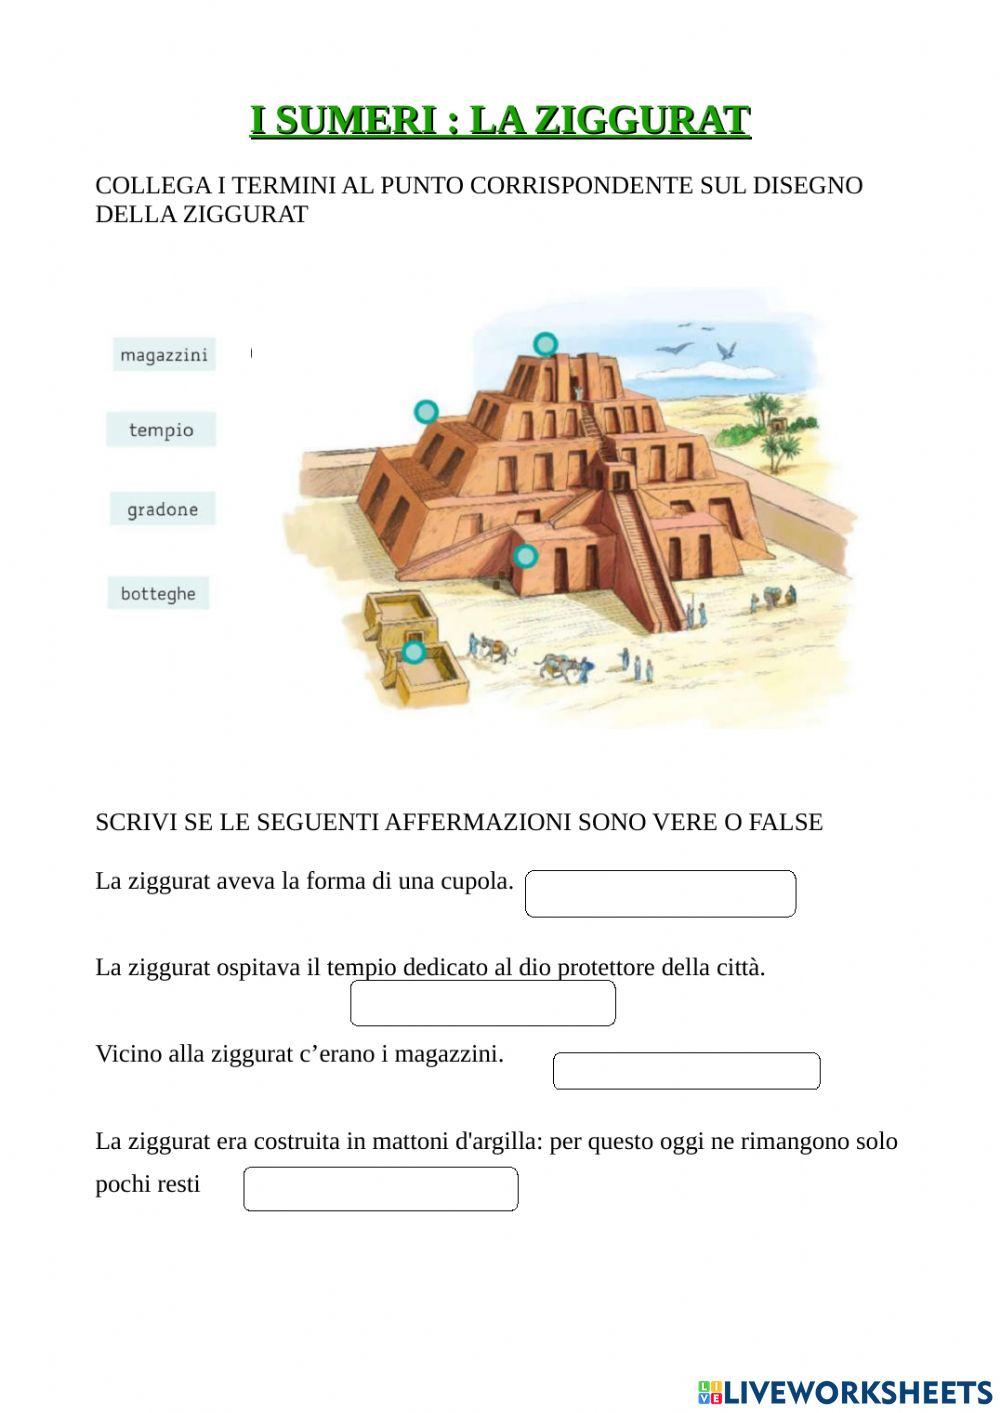 I Sumeri :lo ziggurat worksheet | Live Worksheets